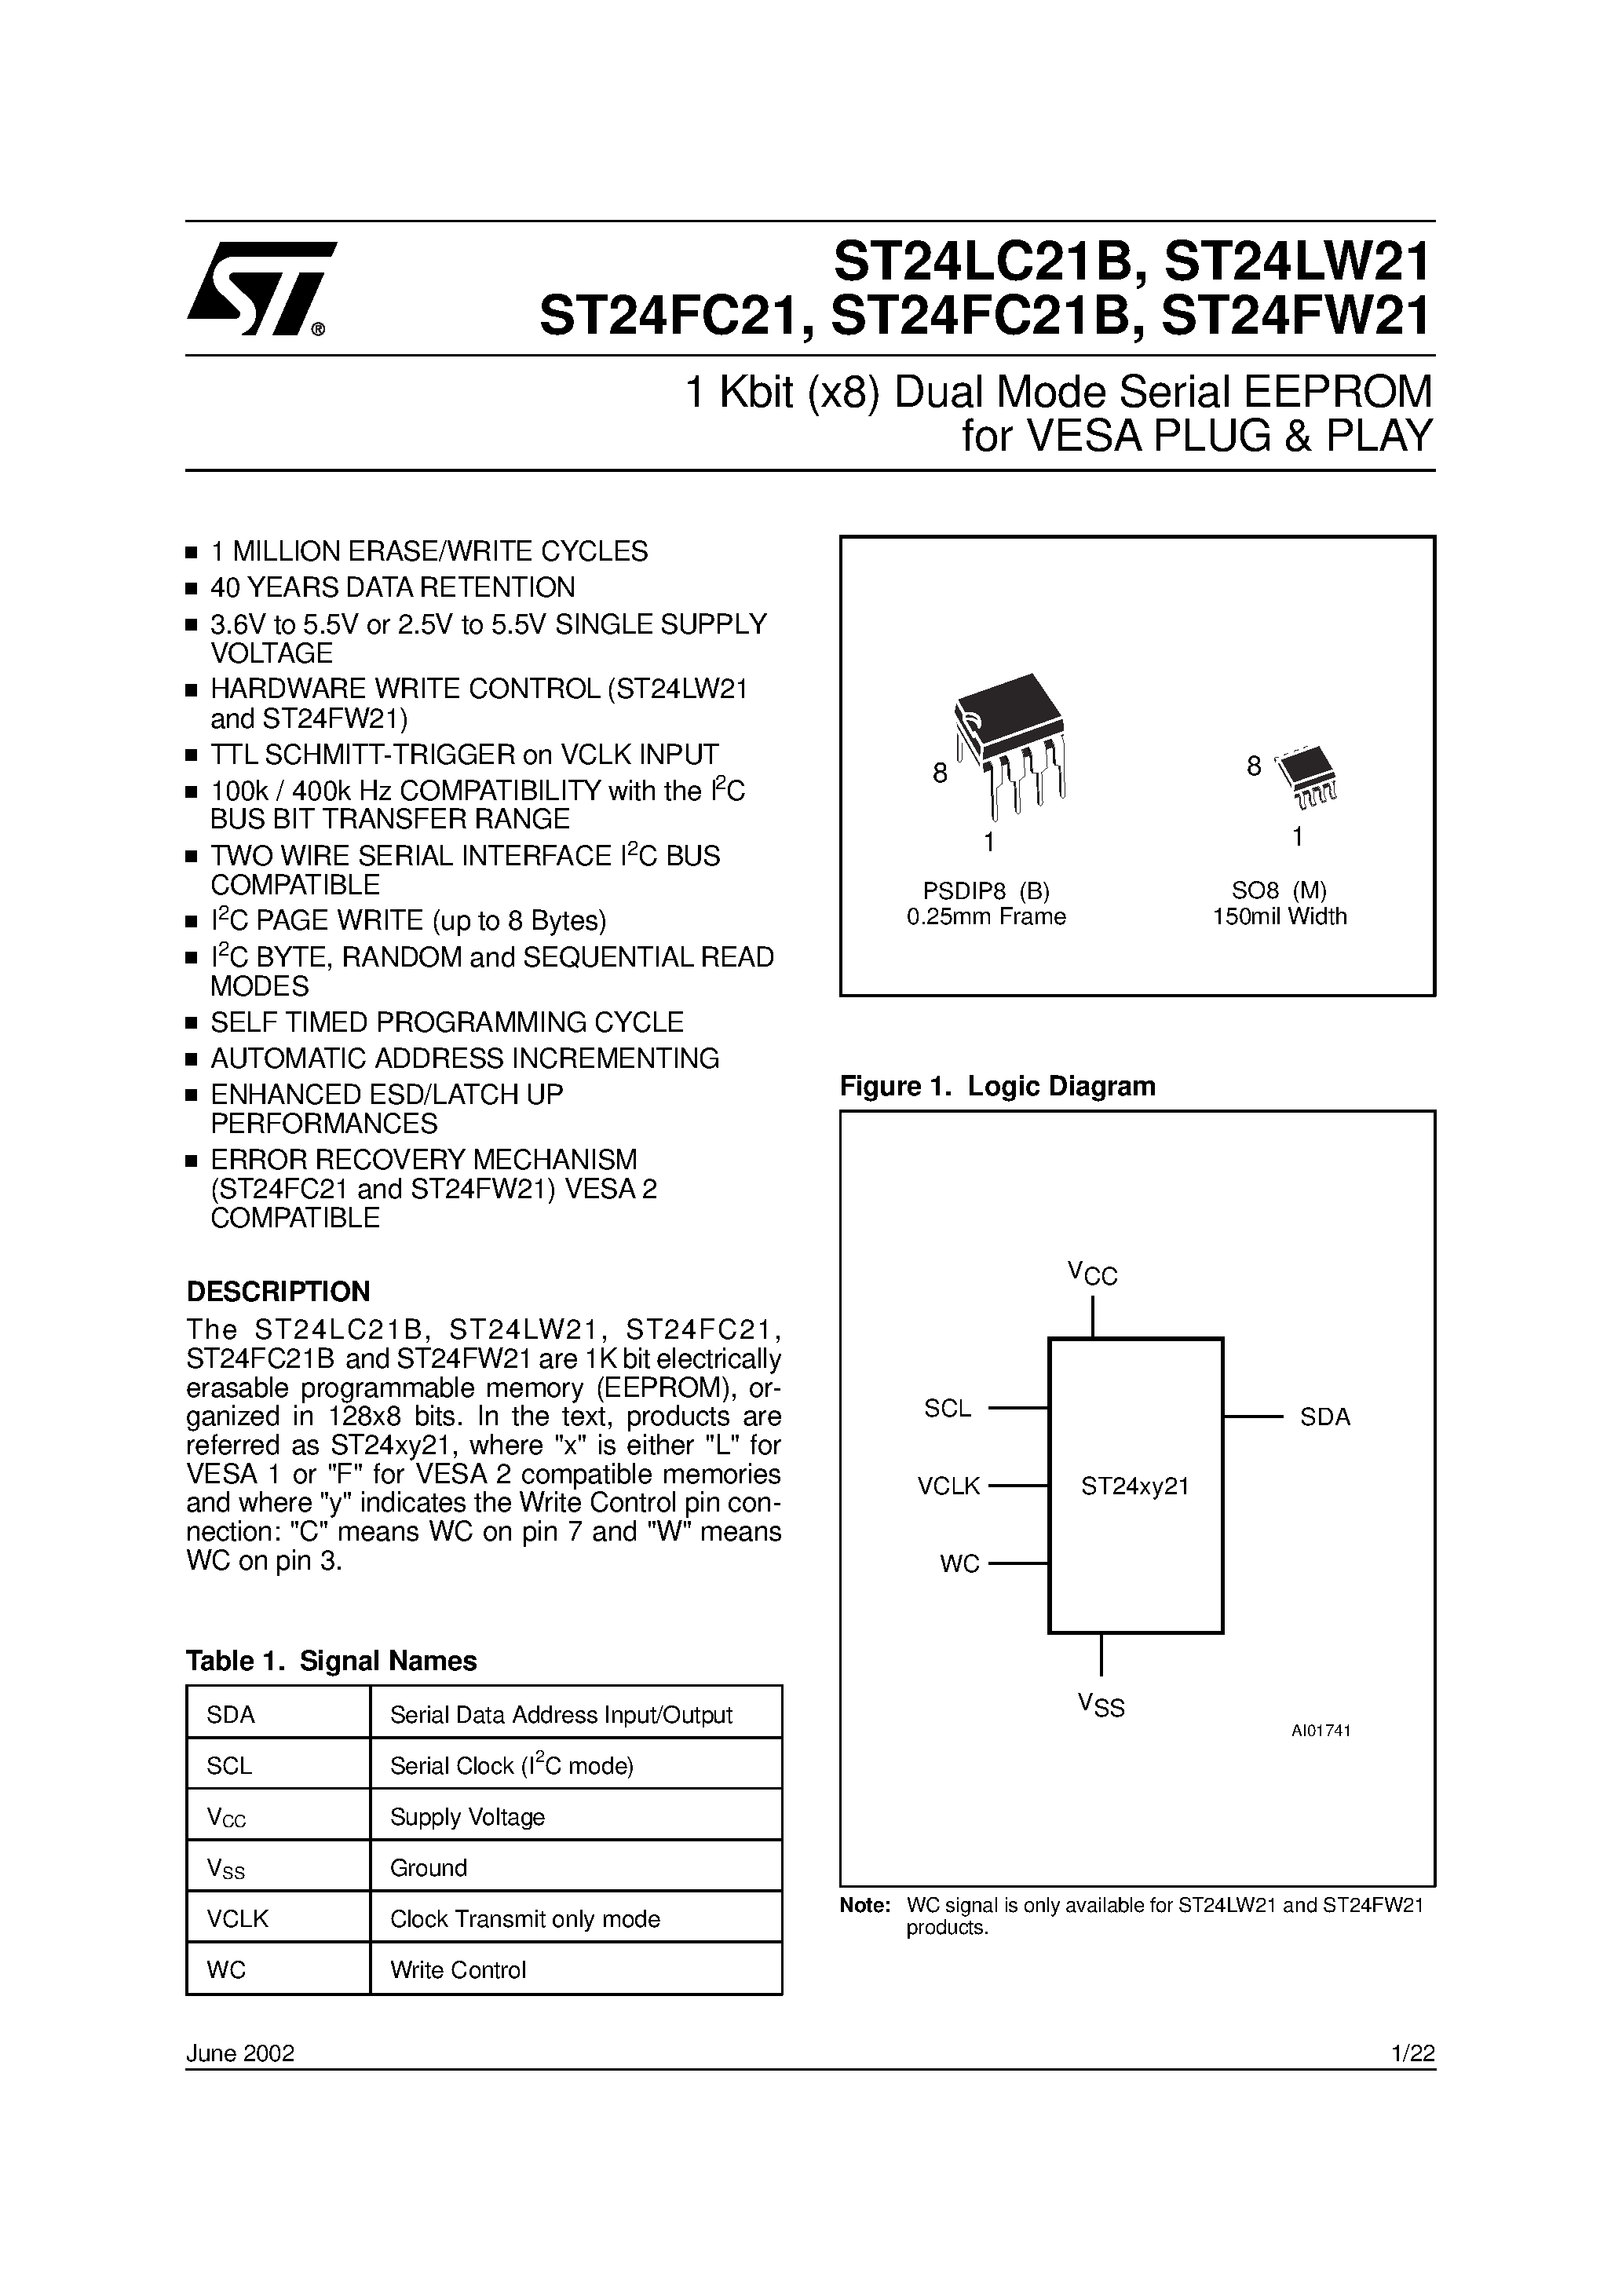 Datasheet ST24FC21B - 1 Kbit x8 Dual Mode Serial EEPROM for VESA PLUG & PLAY page 1